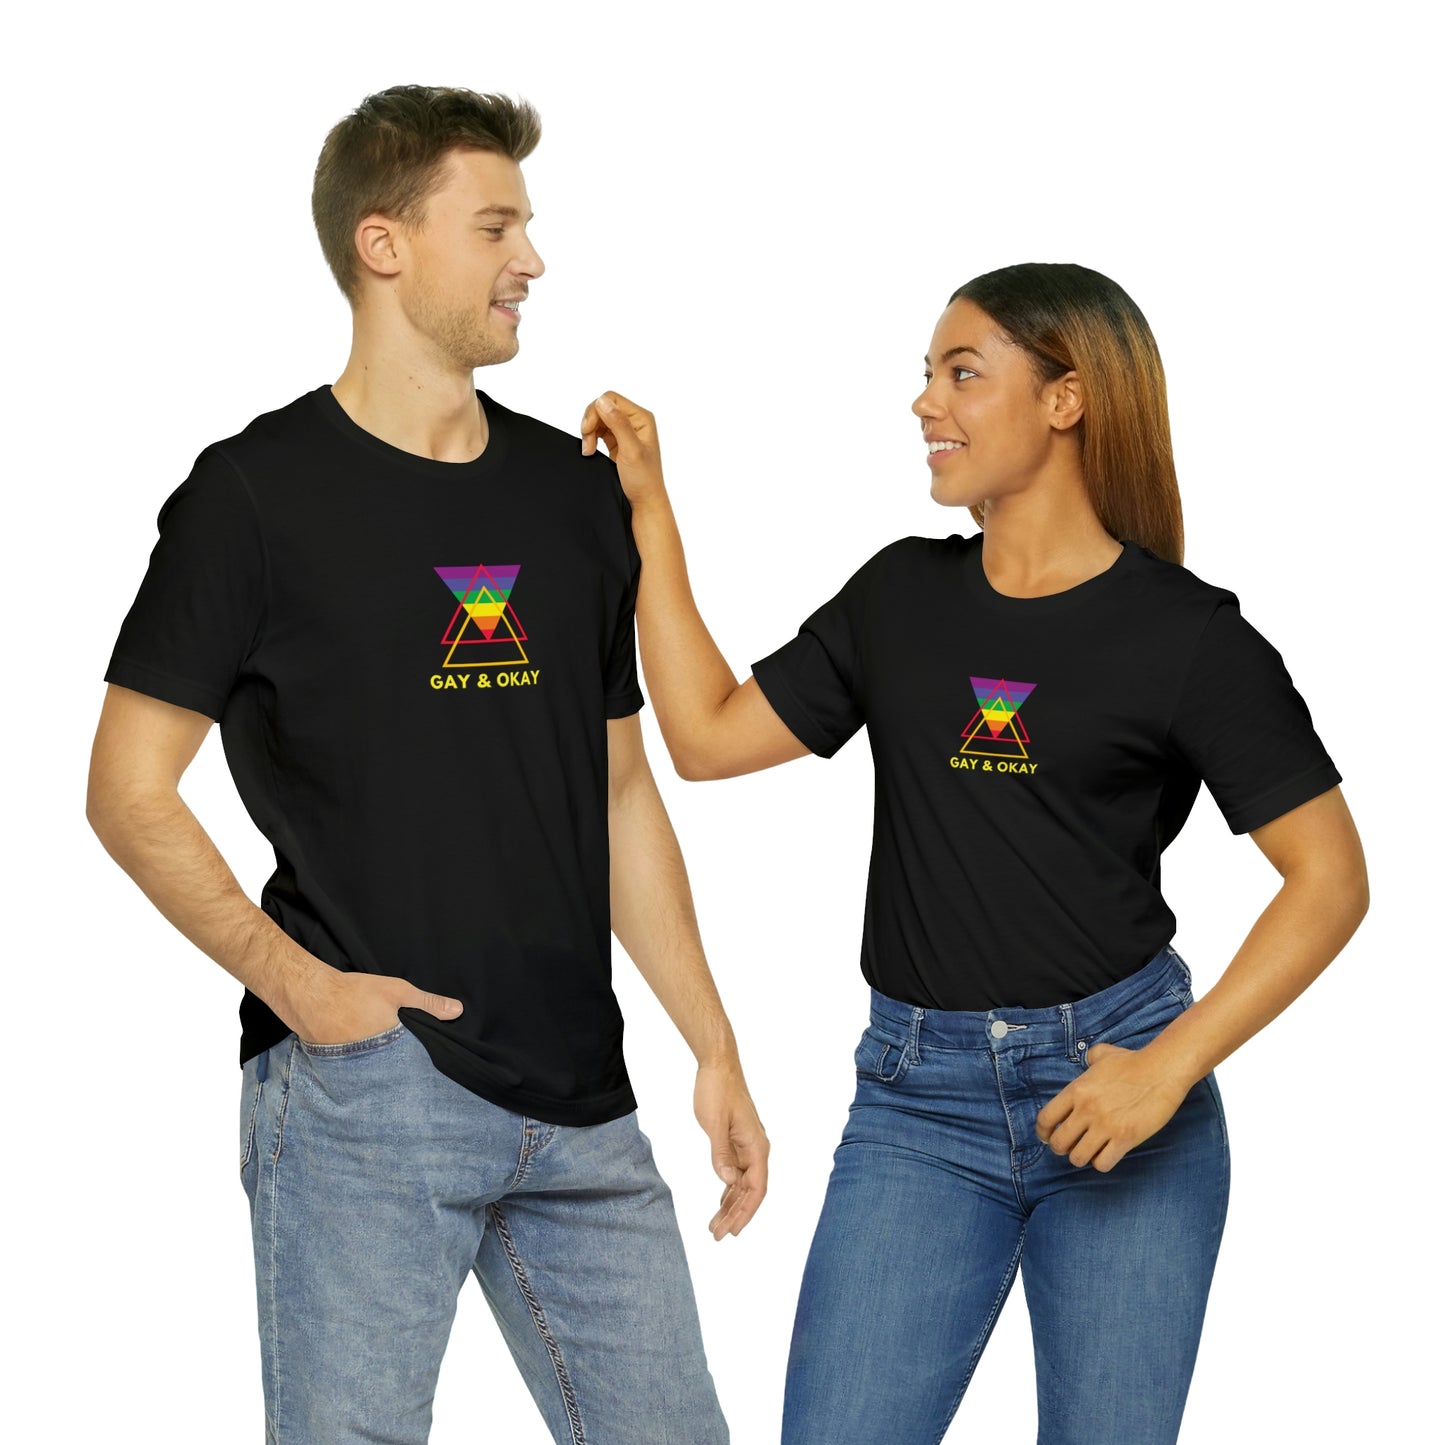 Gay & okay T-shirt